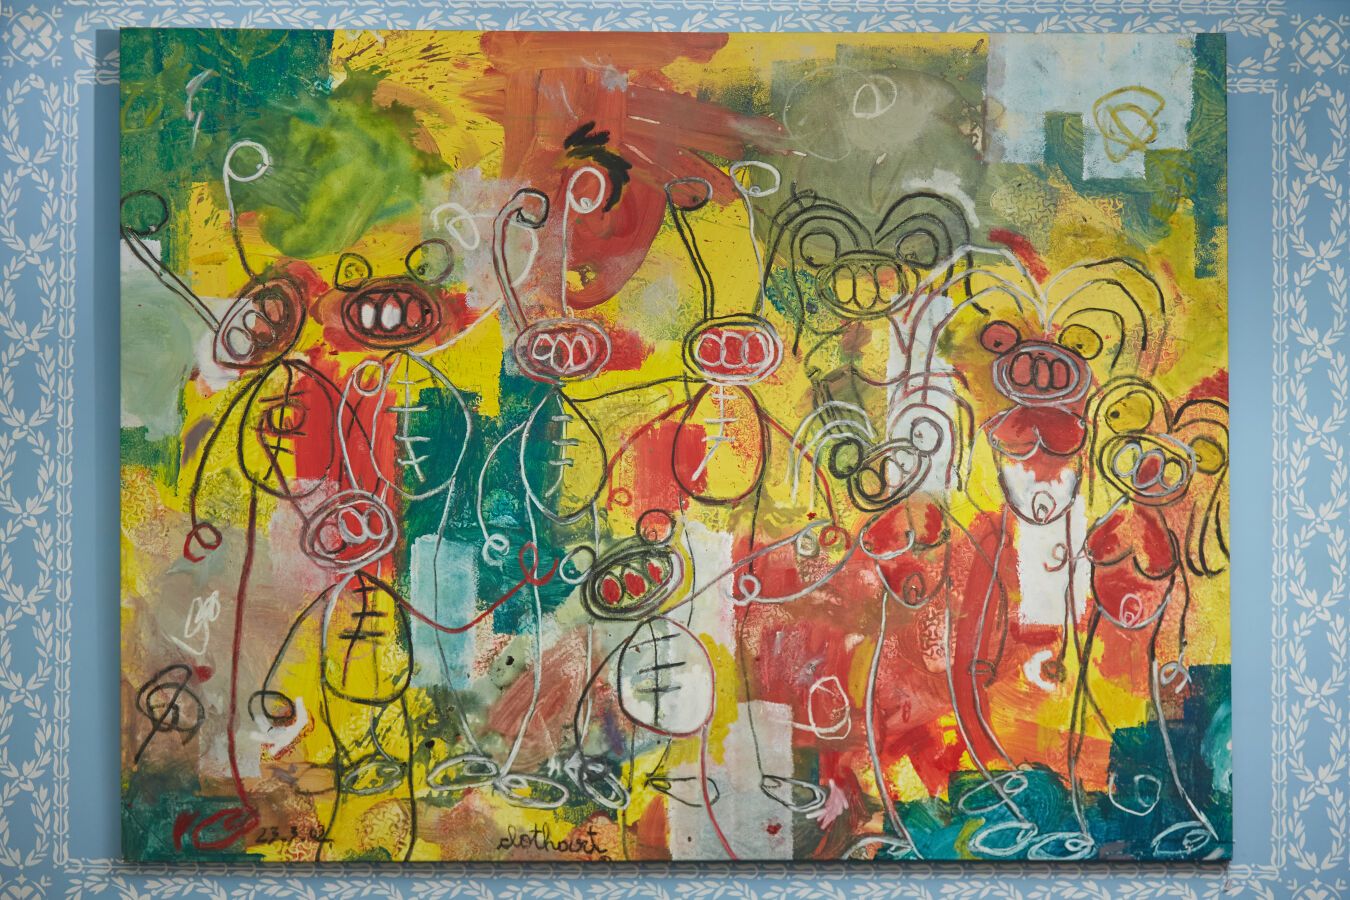 Null 洛里亚-塞德里克（生于1975年）

无题

布面油画，中央下方有签名，左下方有日期 "23.3.02"。

高度：140厘米140；宽度：200厘米